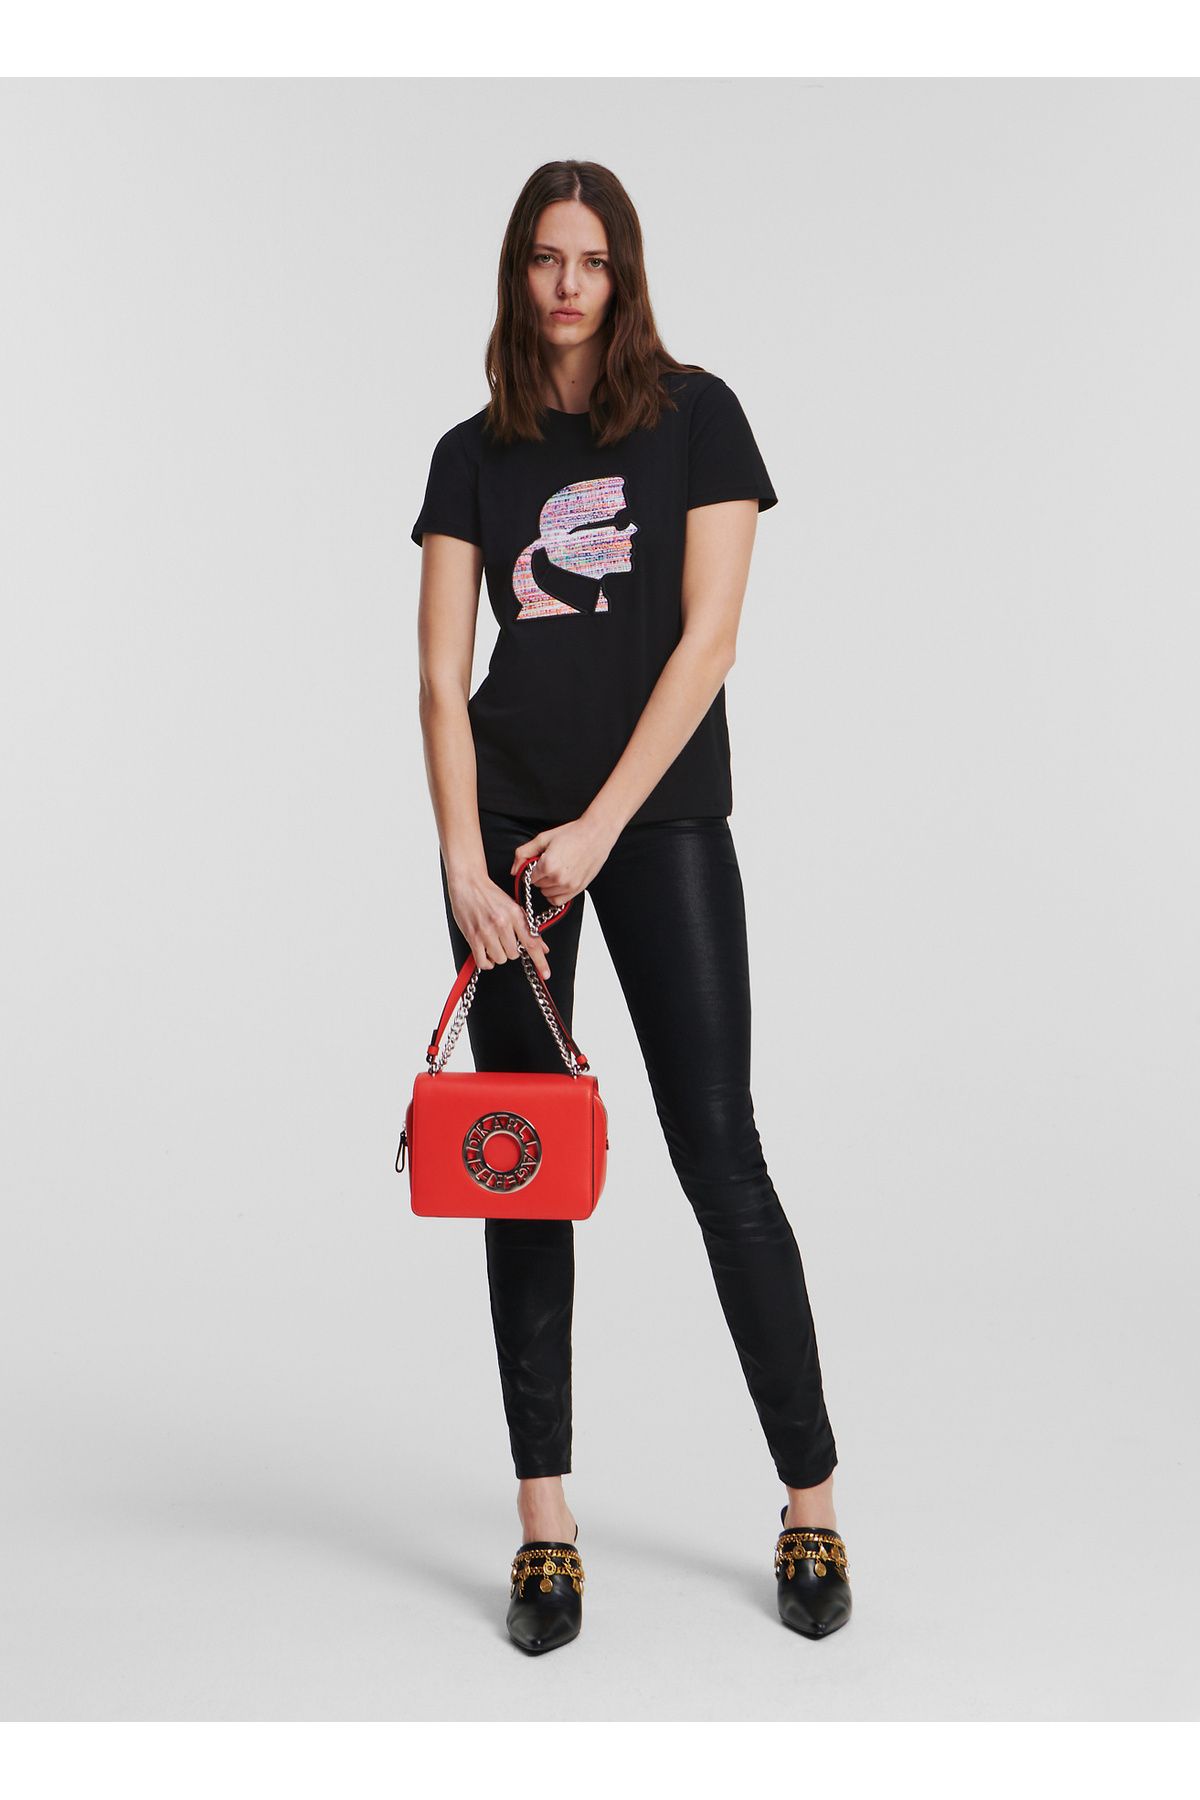 Karl Lagerfeld Bisiklet Yaka Baskılı Siyah Kadın T-Shirt 235W1707